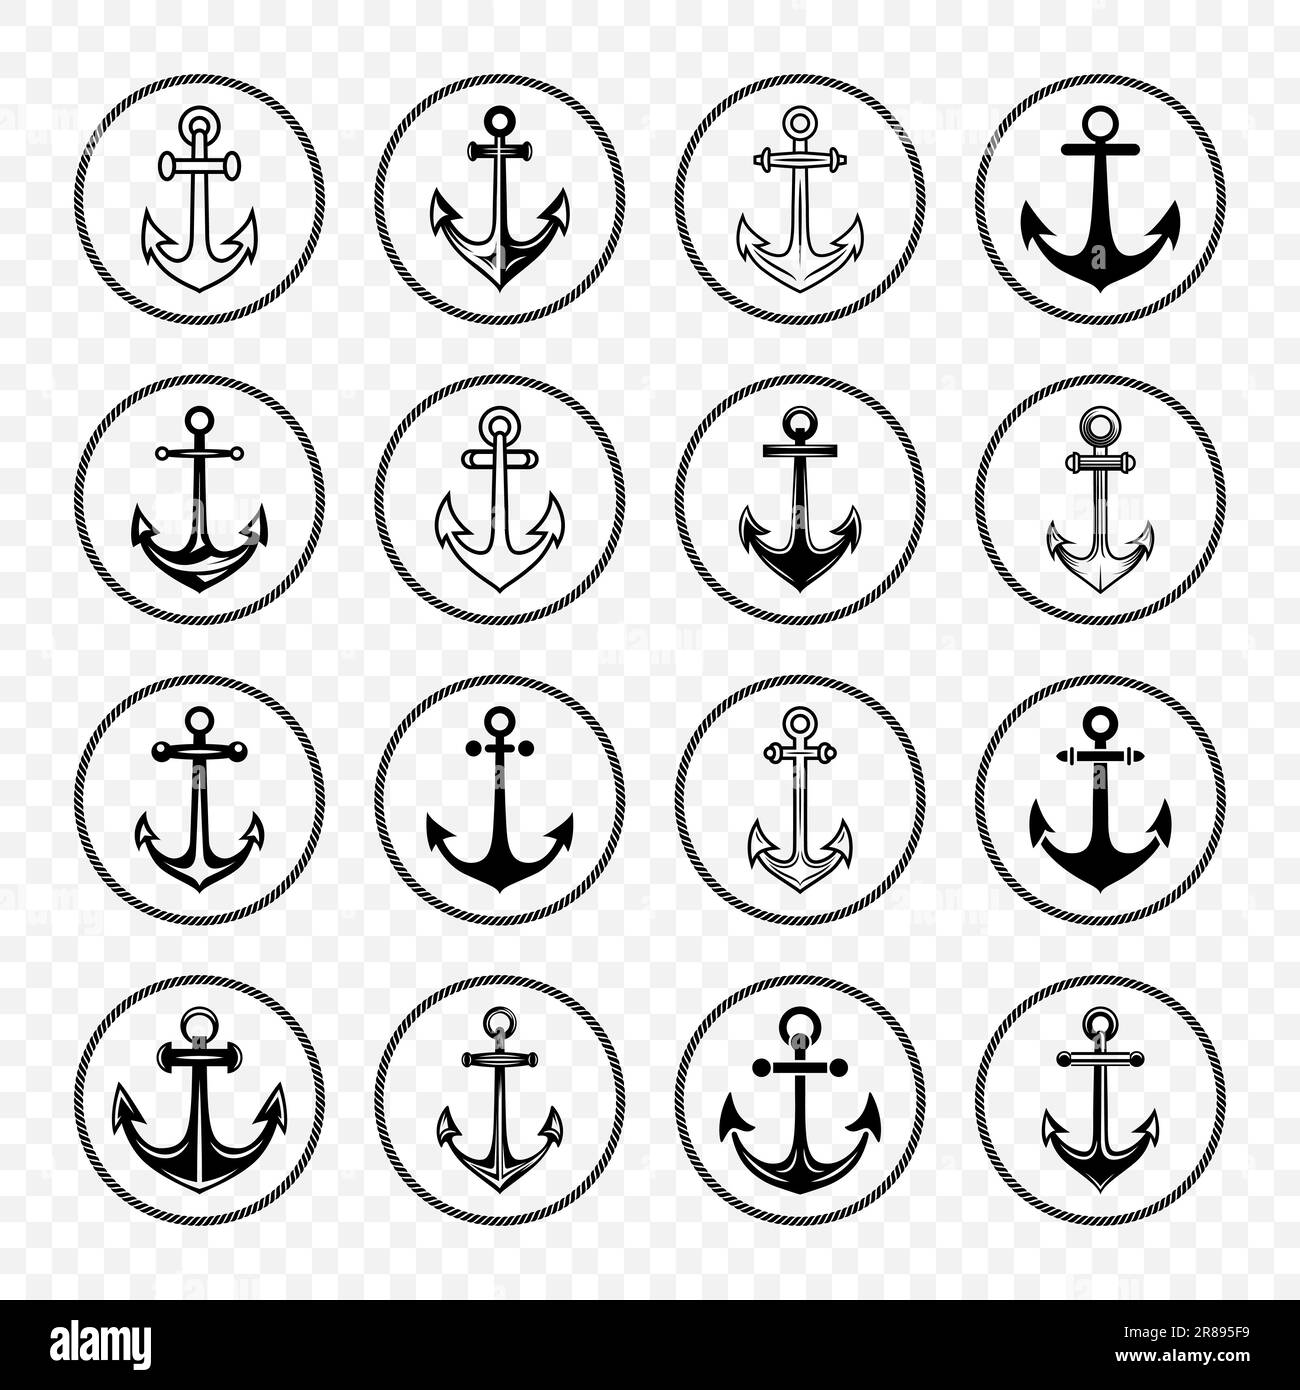 ship and anchor tattoo one on each wrist | Wrist tattoos for women, Anchor  tattoo wrist, Wrist tattoos